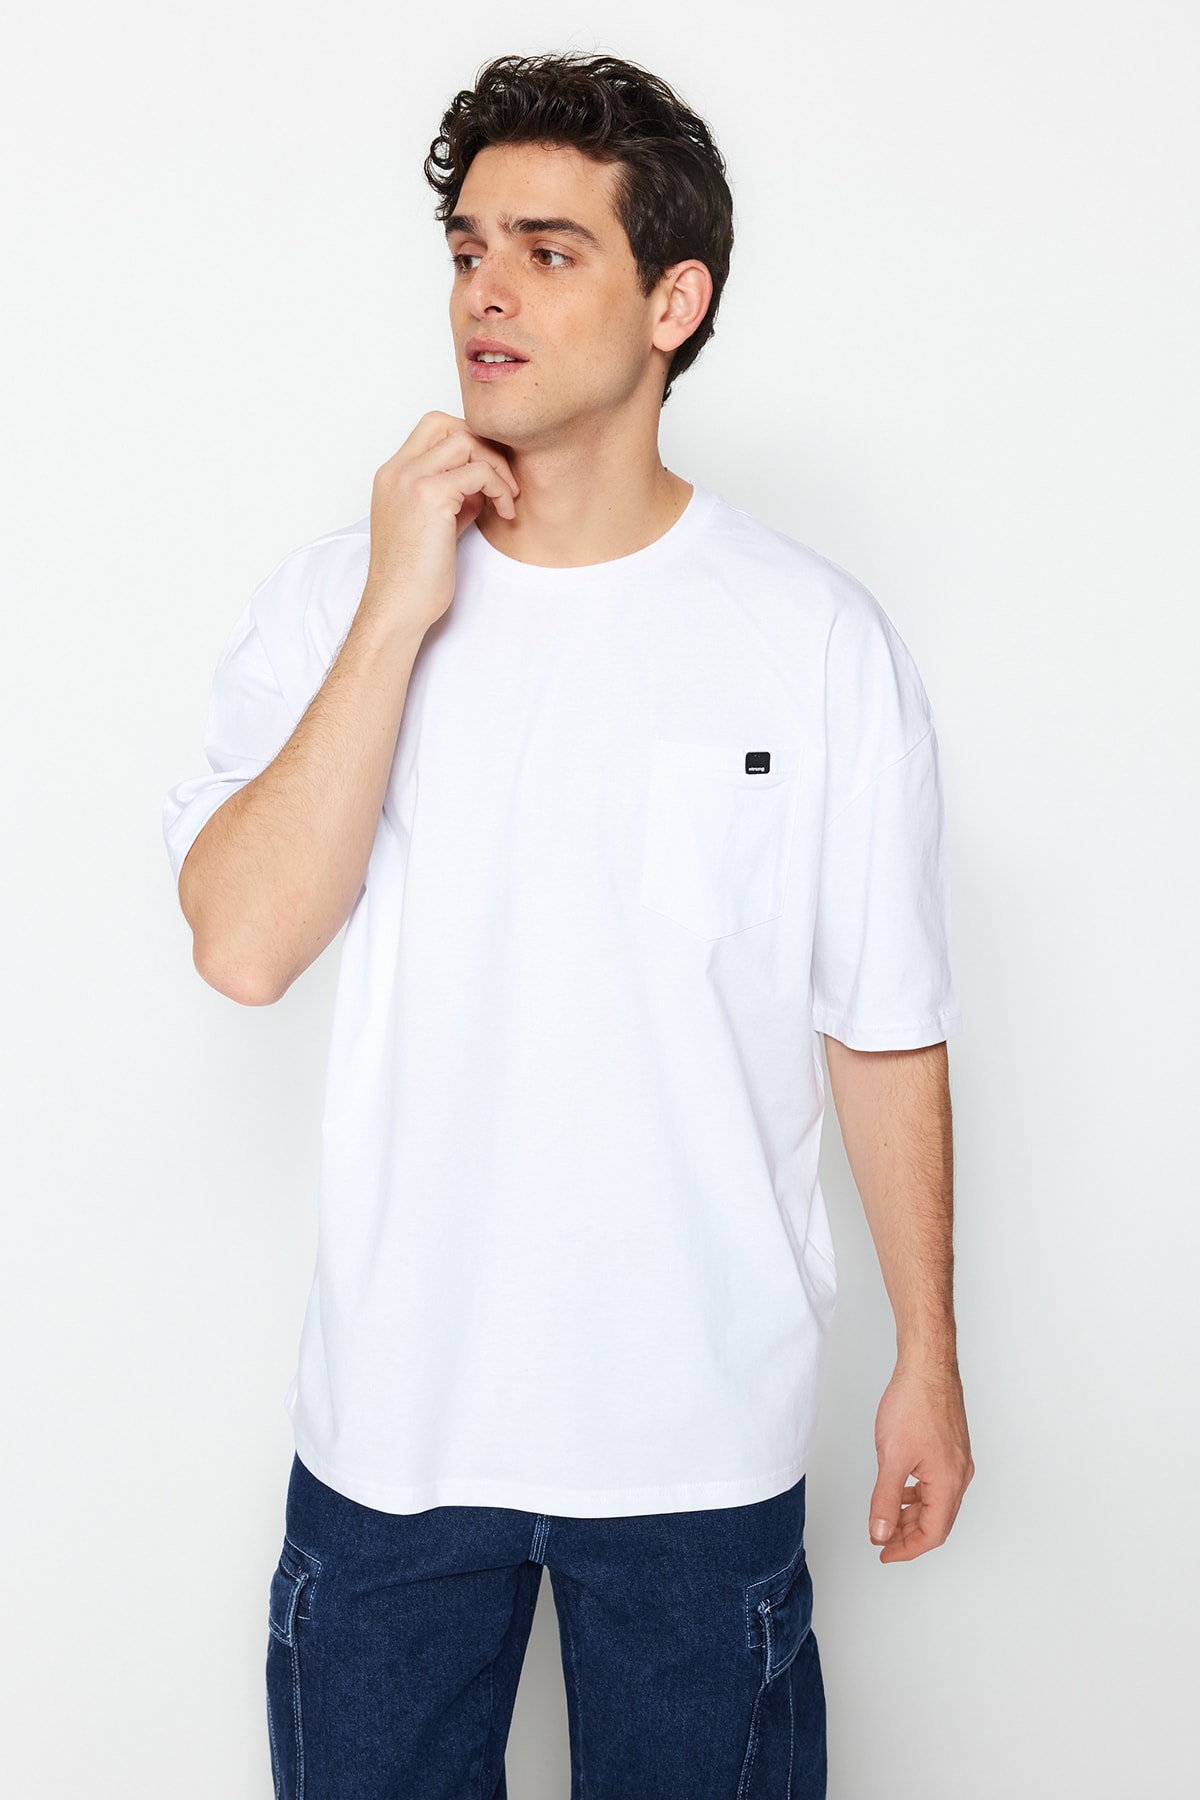 Trendyol Limited Edition White Men's Oversize/Wide Cut Crew Neck Short Sleeve T-Shirt